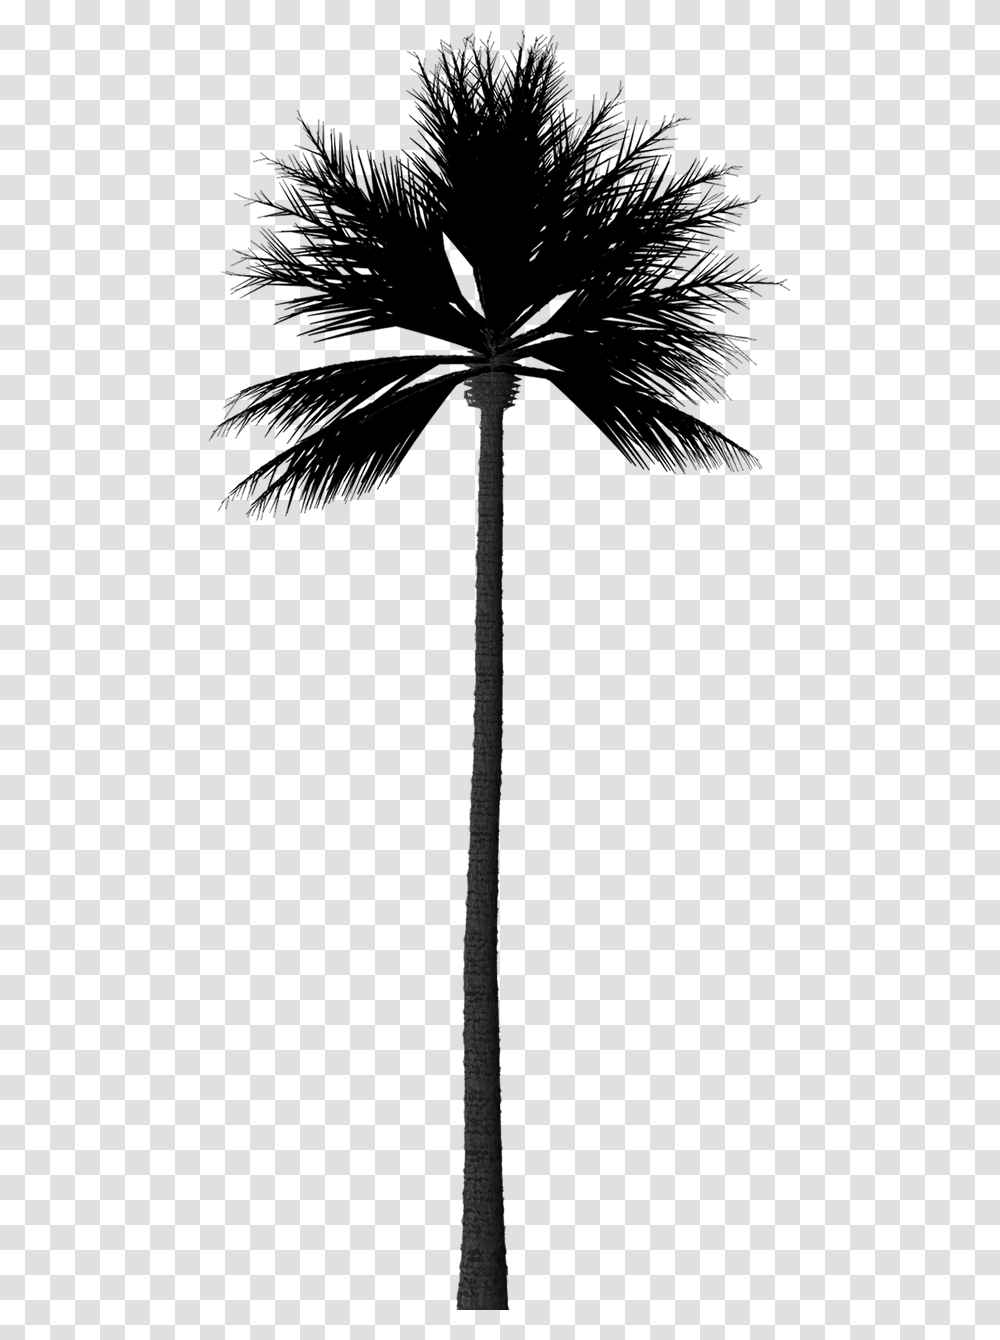 Photoshop Palm Tree Silhouette, Lamp Post, Emblem, Weapon Transparent Png